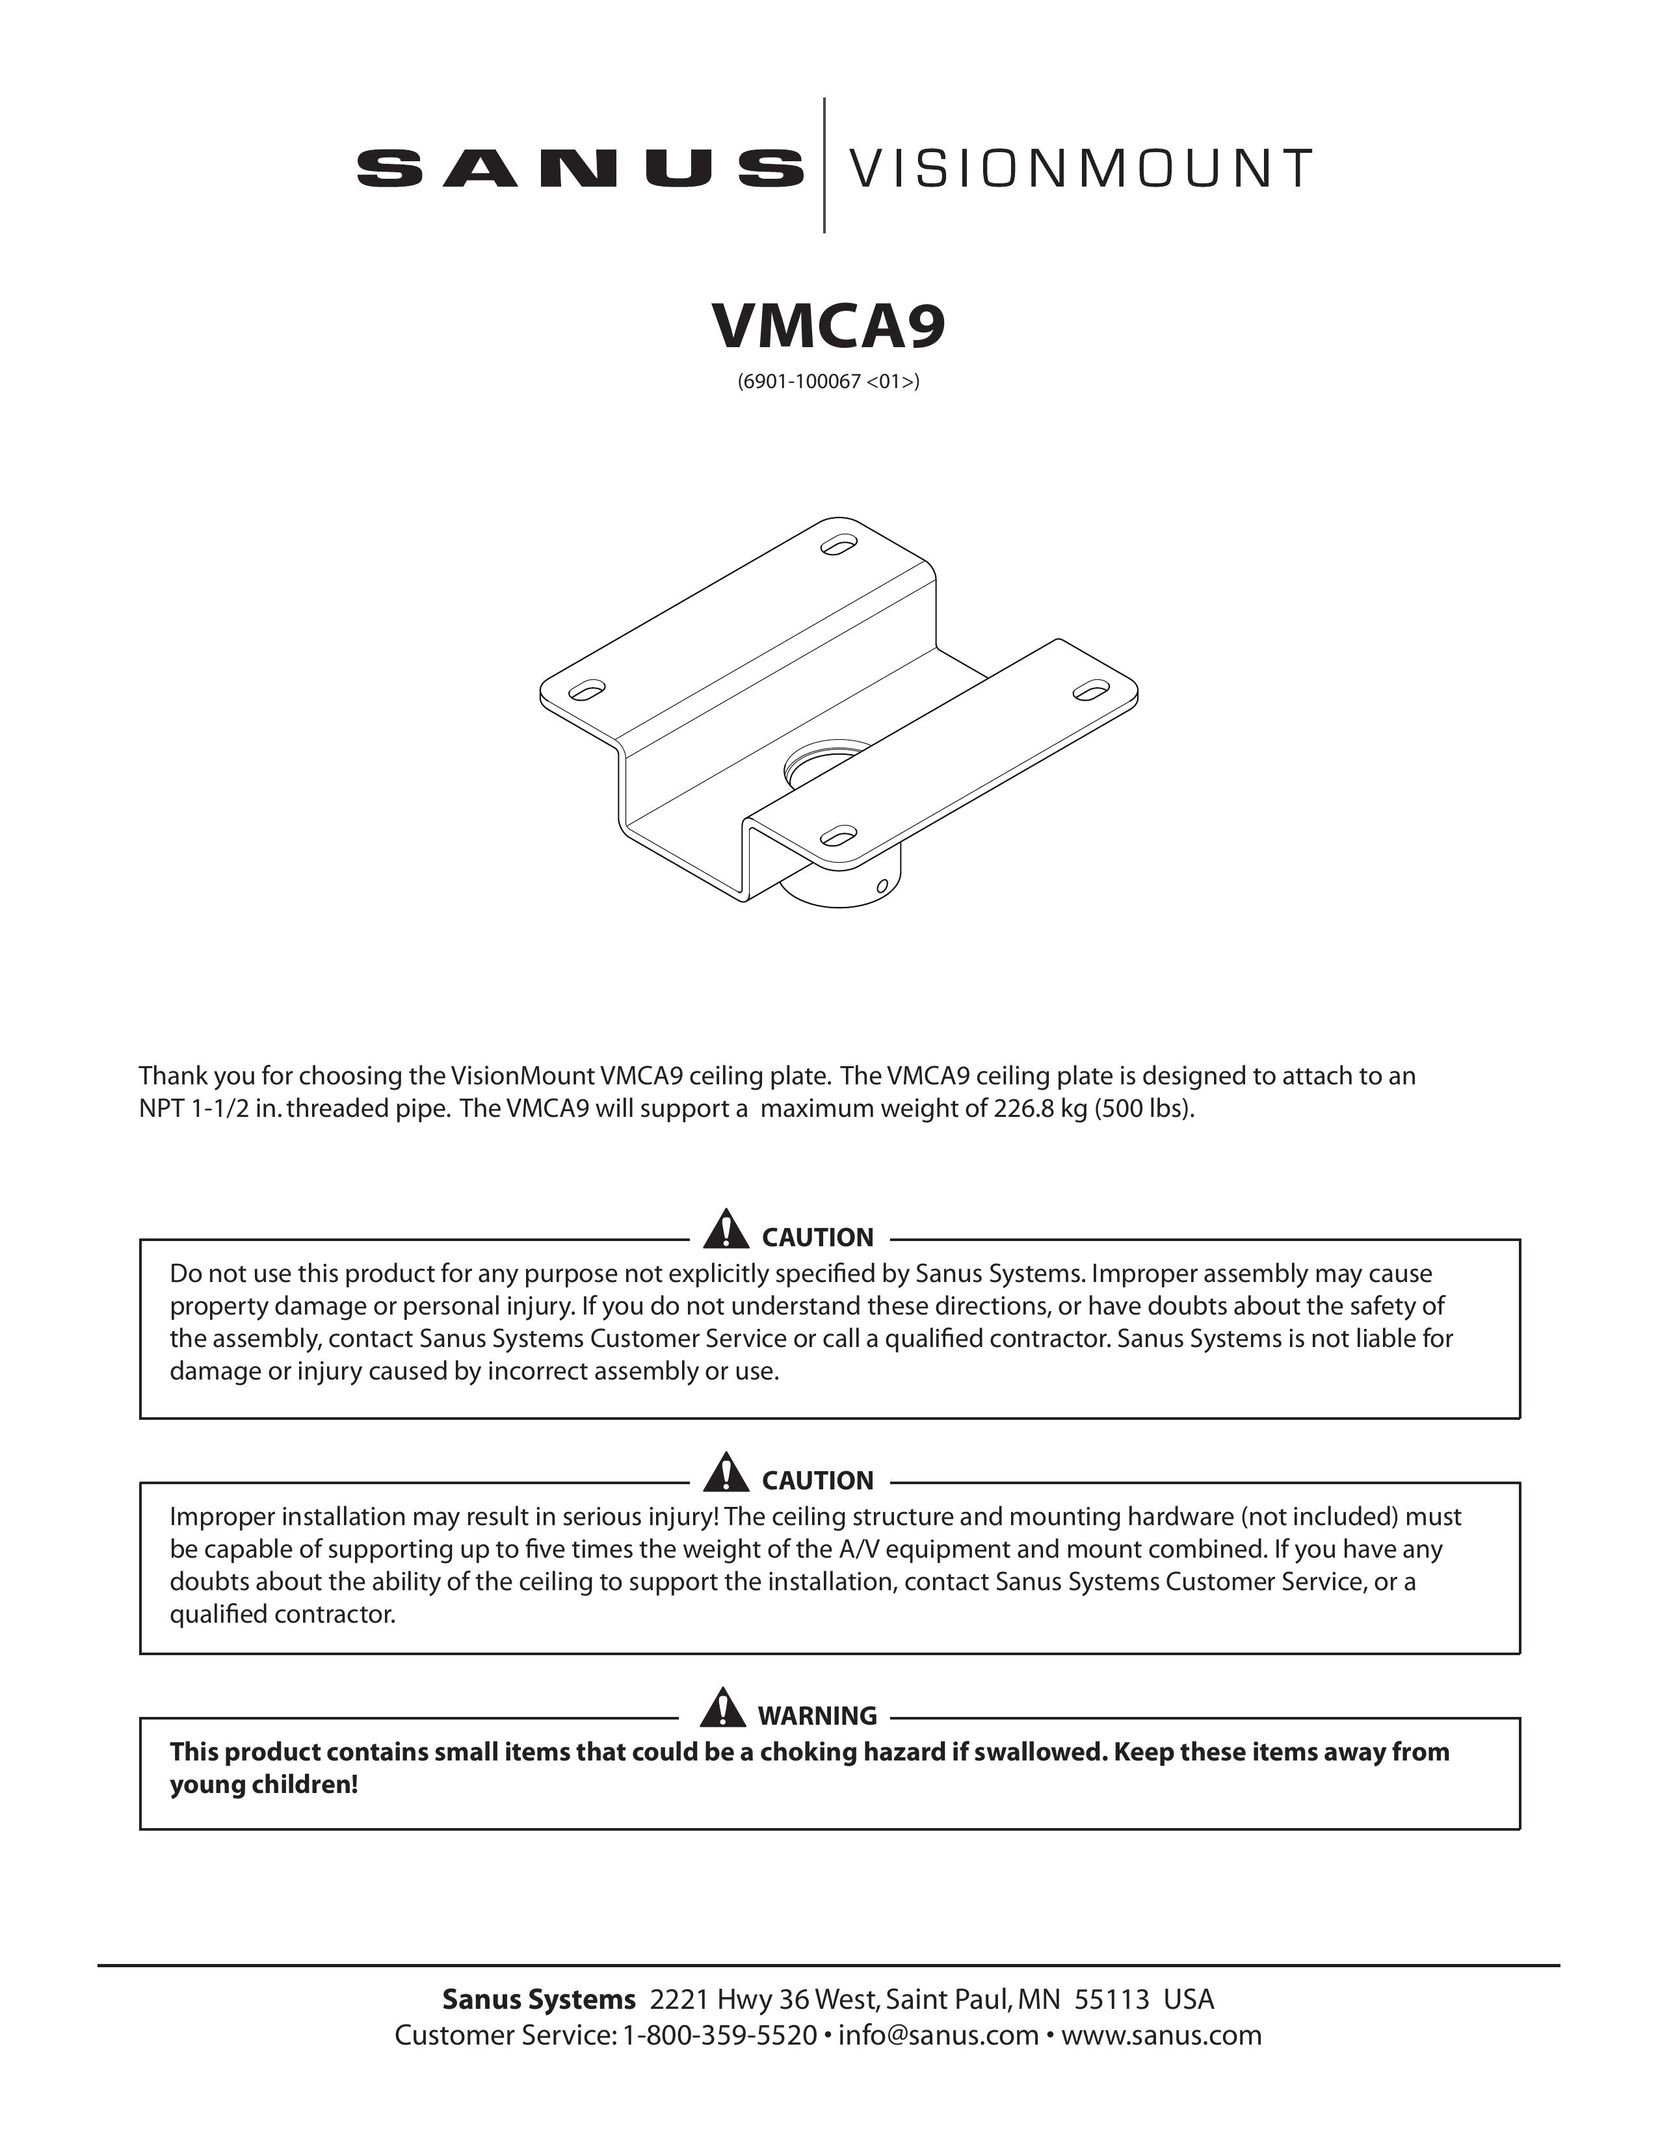 Sanus Systems VMCA9 Clock User Manual